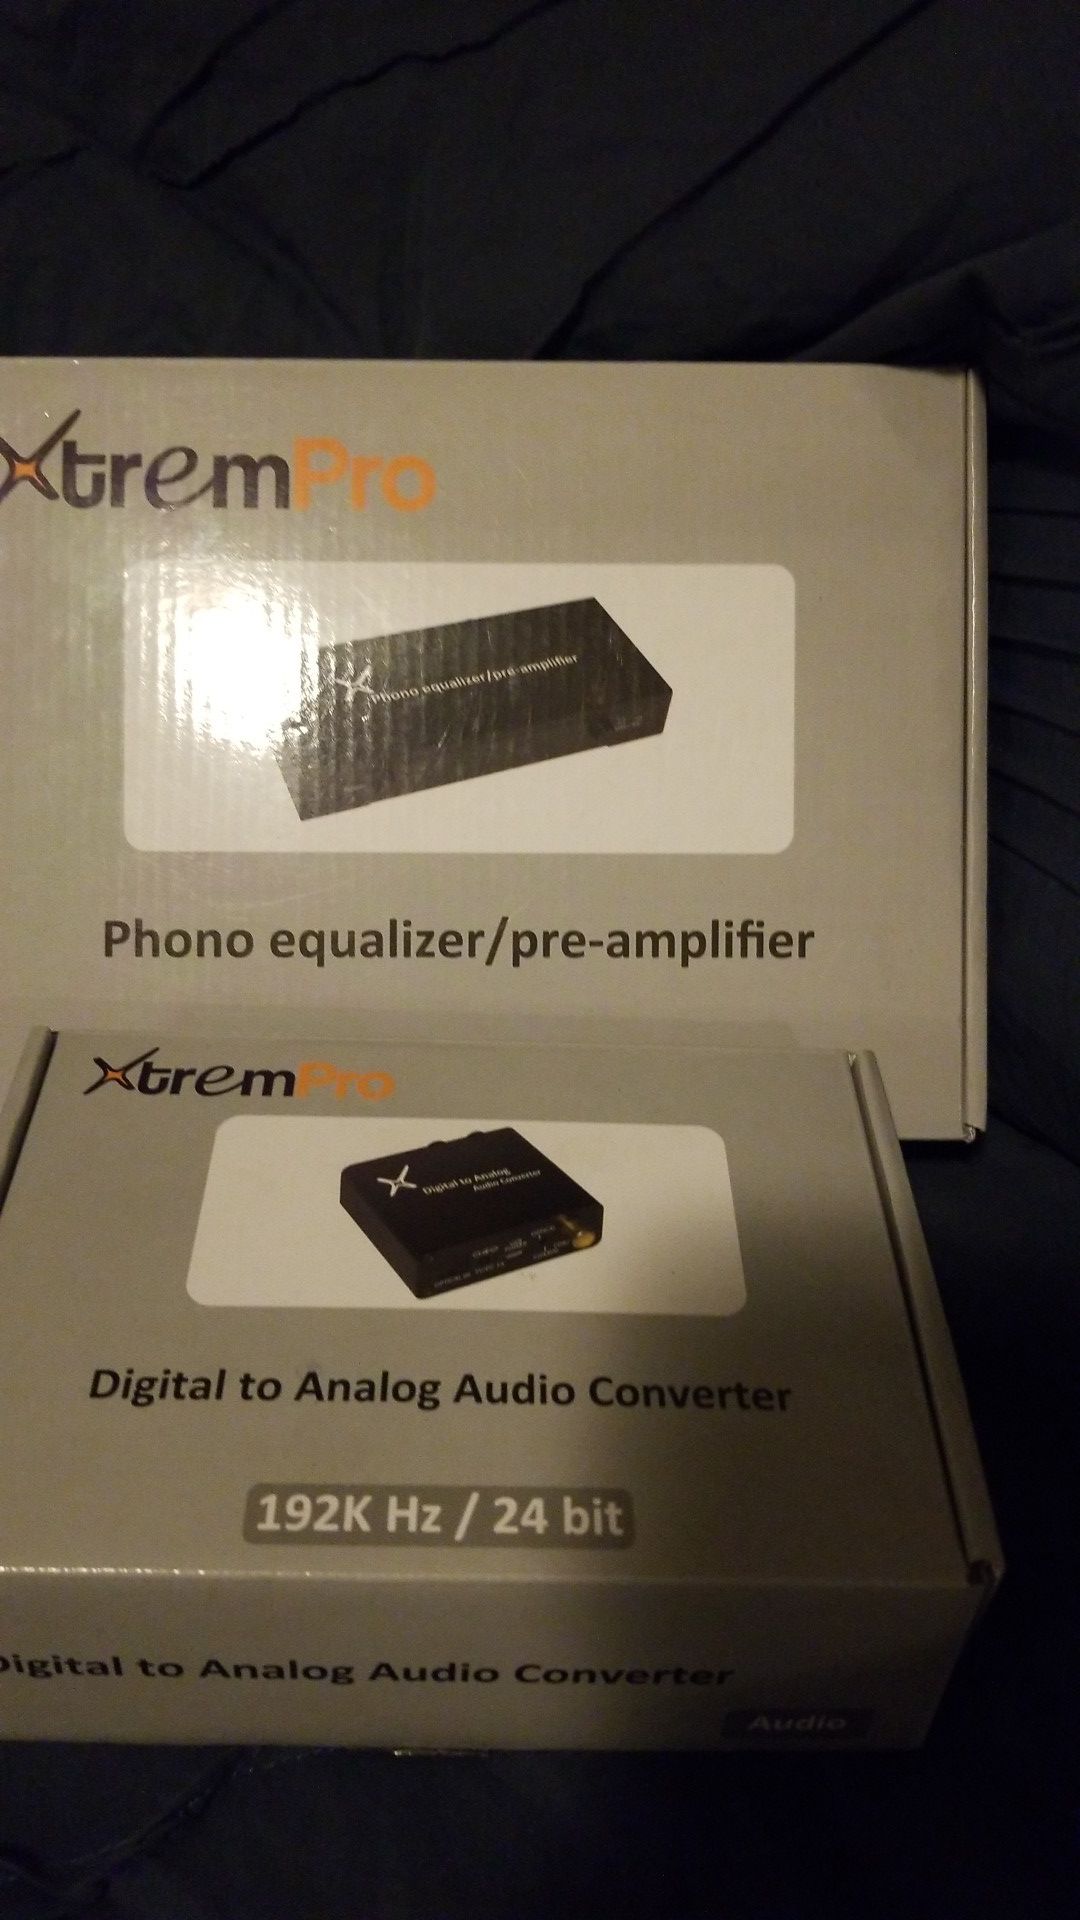 Xtrem pro phono equalizer pre amplifier and digital analog audio converter